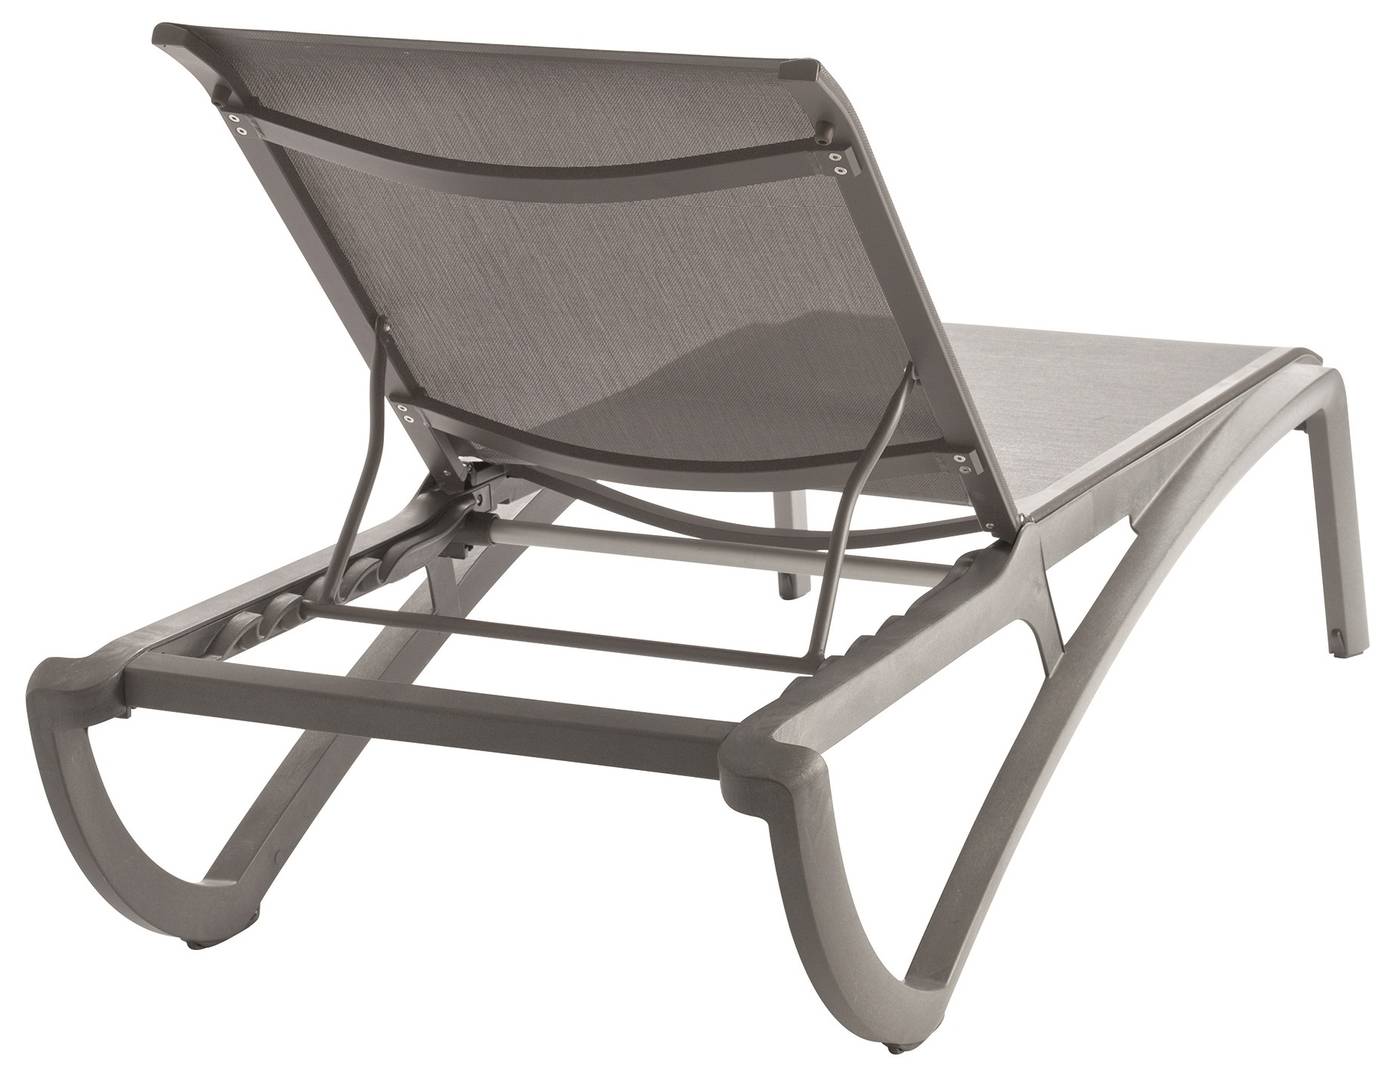 Cama/tumbona Sunset - Cama/tumbona apilable , con ruedas, de fibralite y textileno. Disponible en color blanco, gris, bronce, o negro.